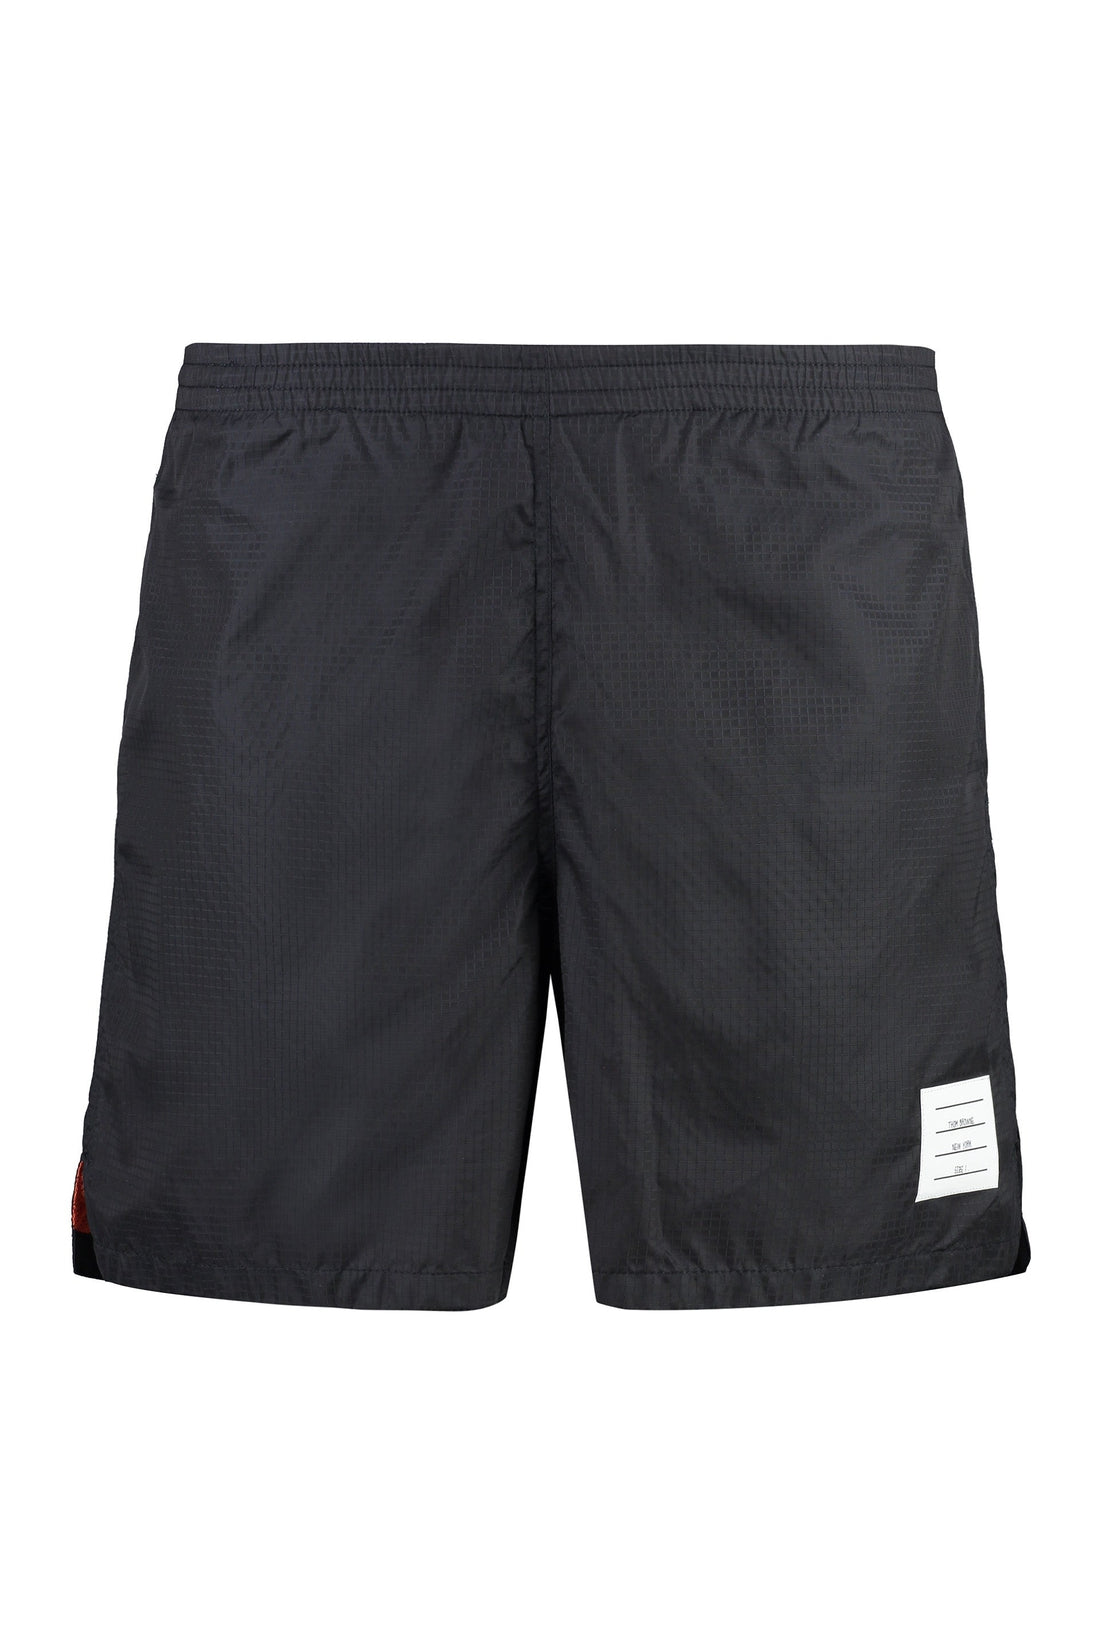 Thom Browne-OUTLET-SALE-Nylon shorts-ARCHIVIST